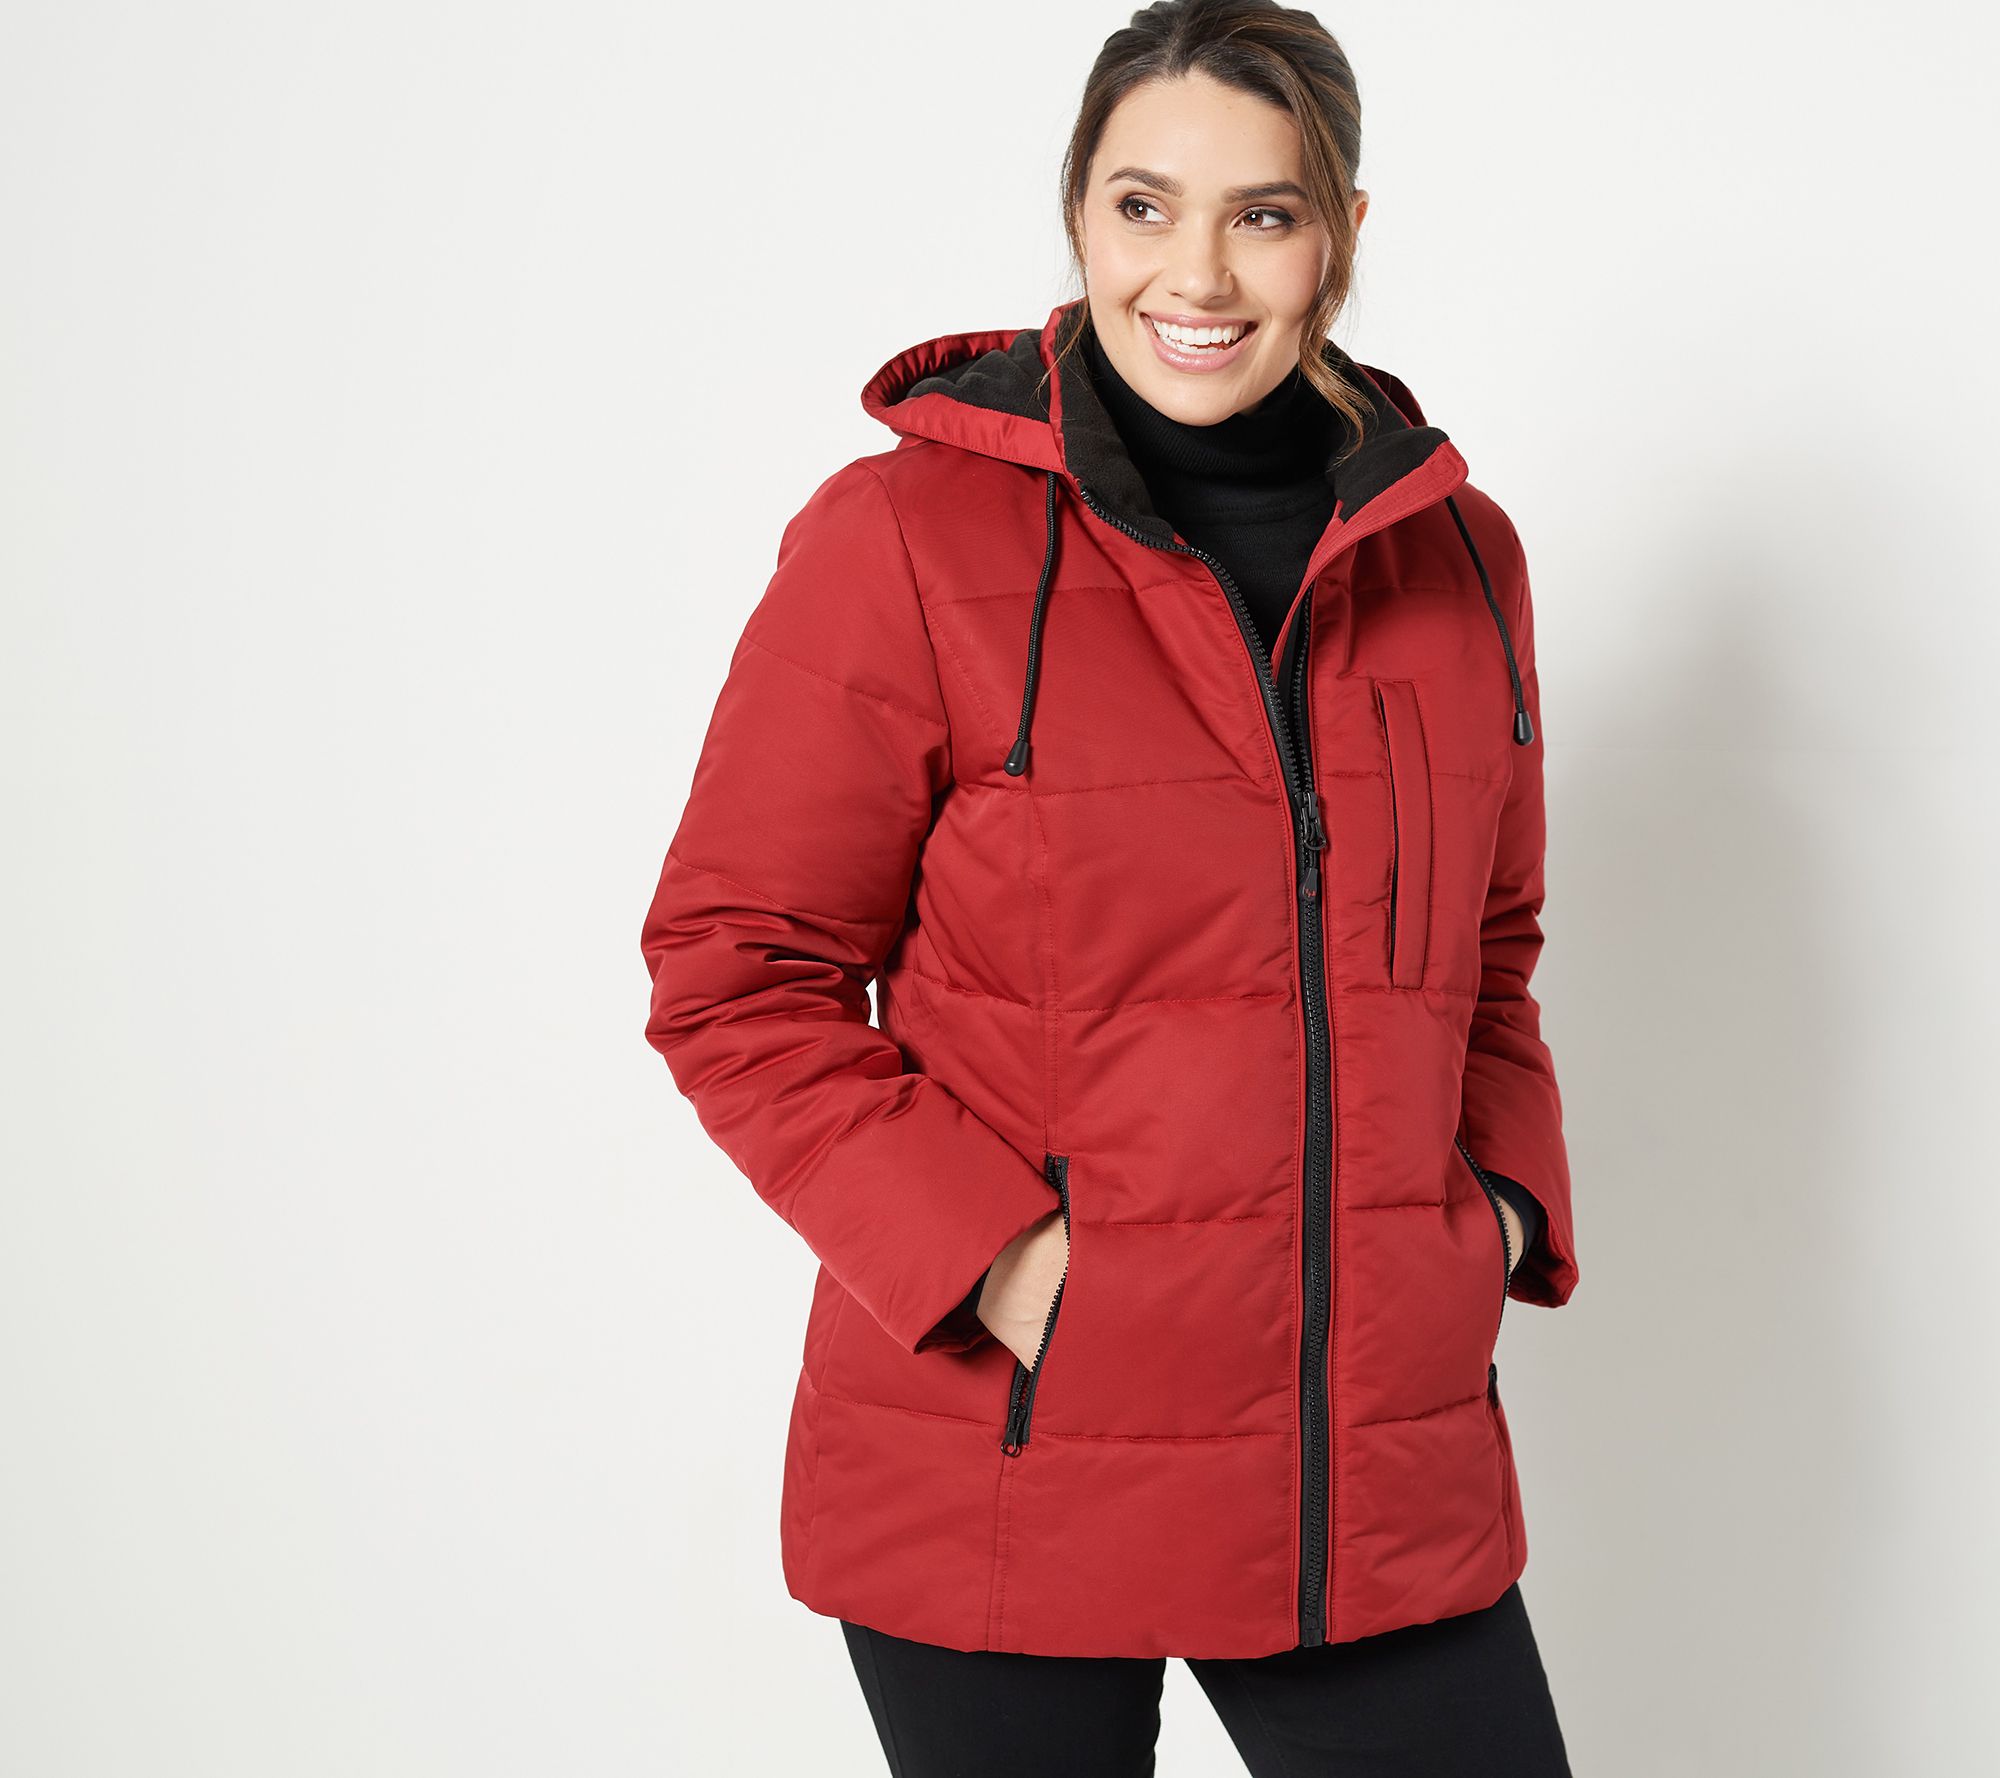 Generic Womens Winter Warm Faux Fur Hooded Padded Coat Parka Long Jacket 